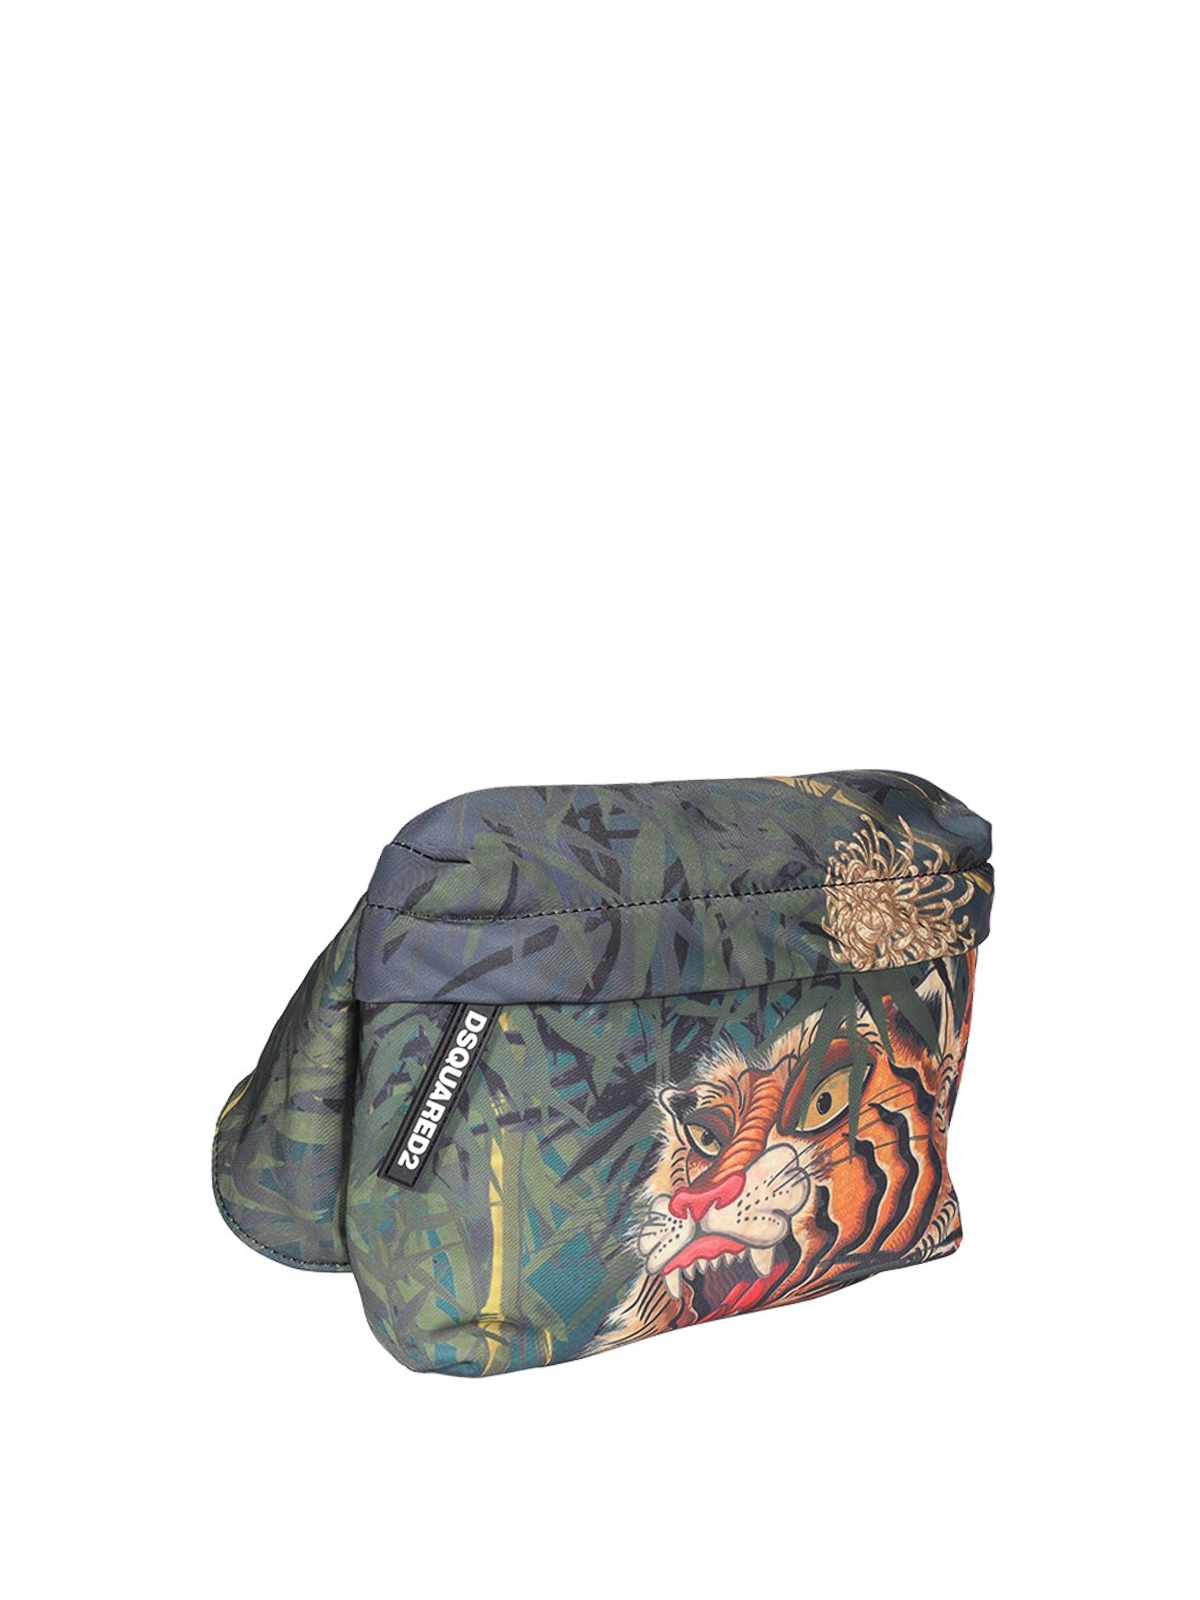 Dsquared2 camouflage-print Messenger Bag - Multicolour